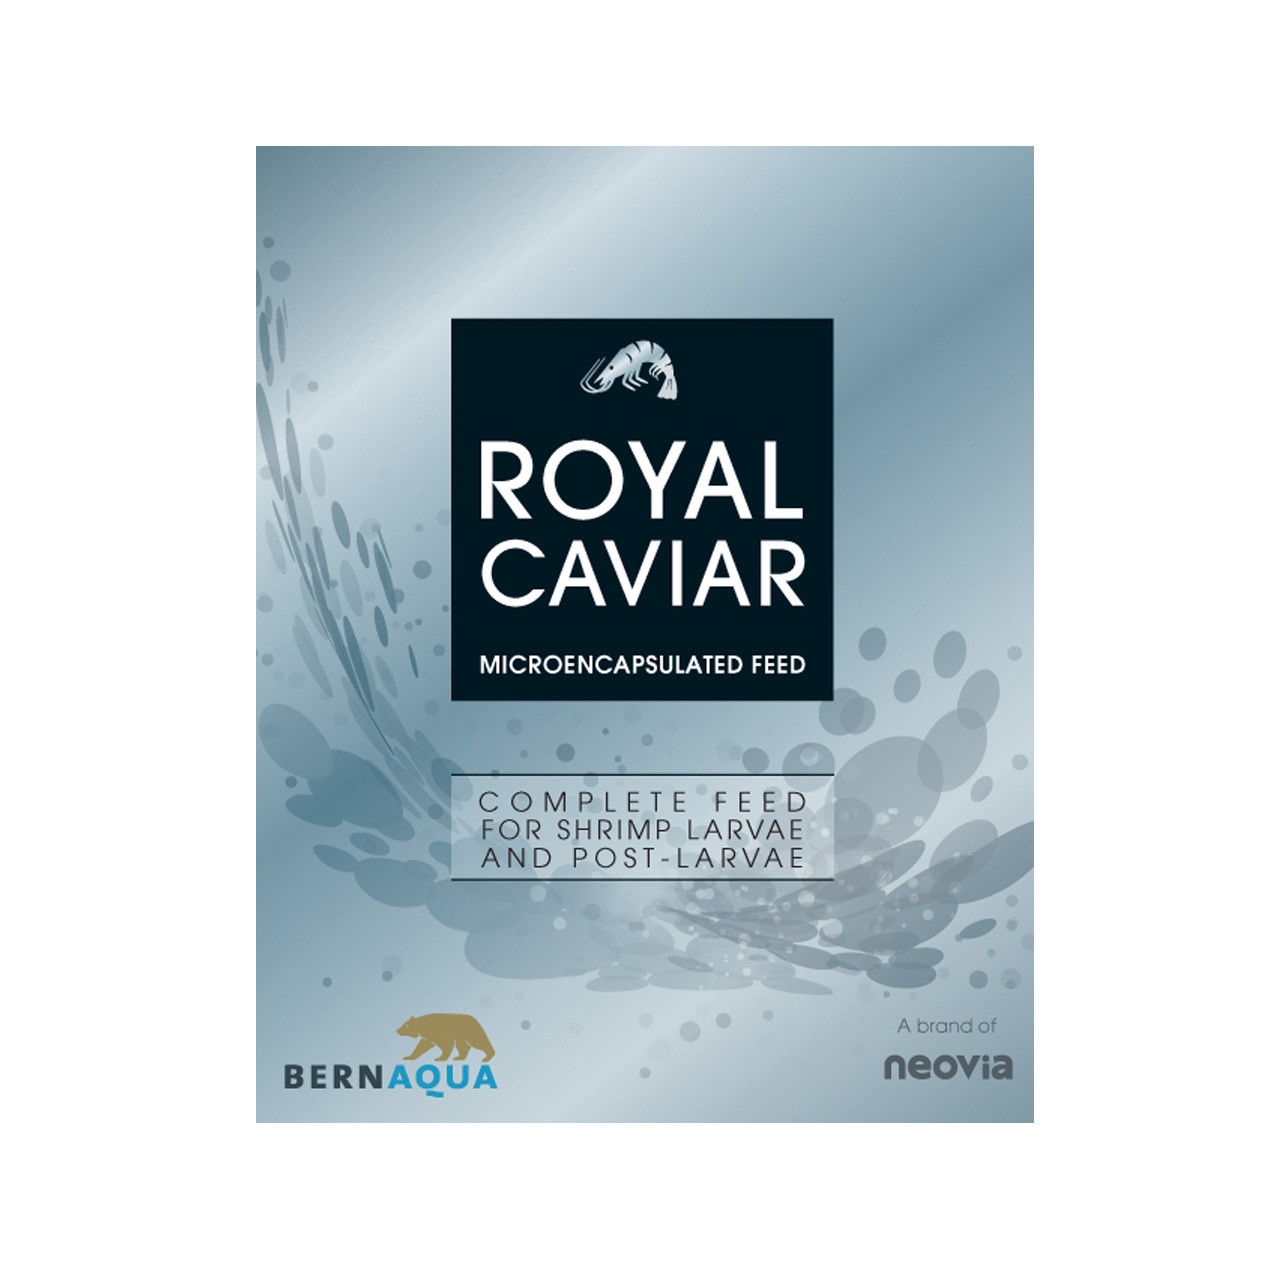 Royal Caviar dieta para larvas de camarón BernAqua